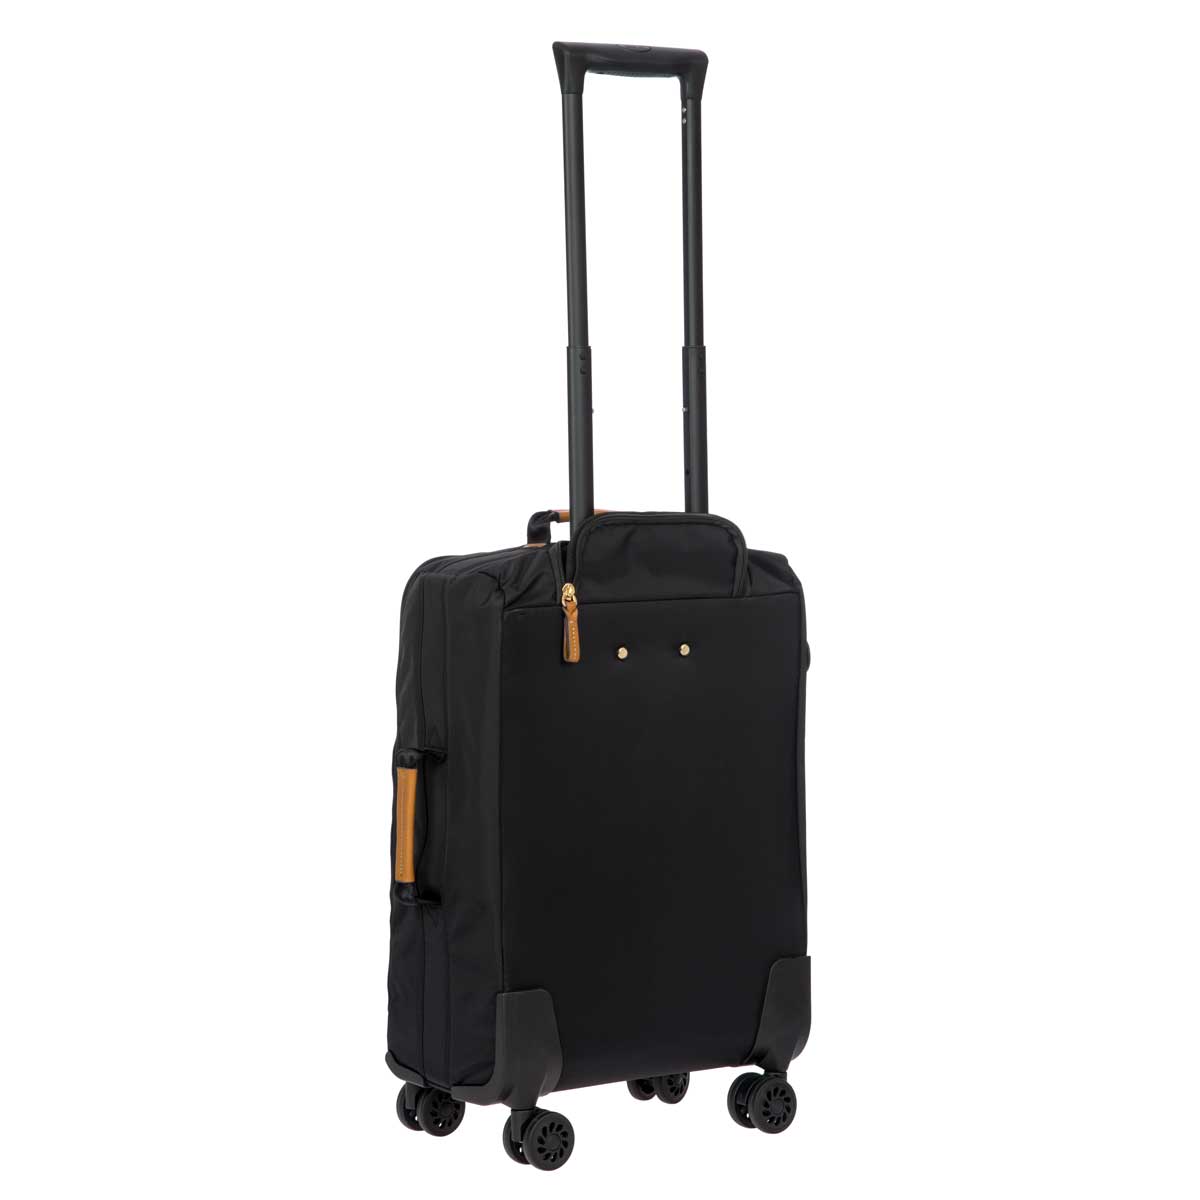 VÄRLDENS Carry-on bag with wheels, black, 13 ½x7 ¾x21 ¼/1014 oz